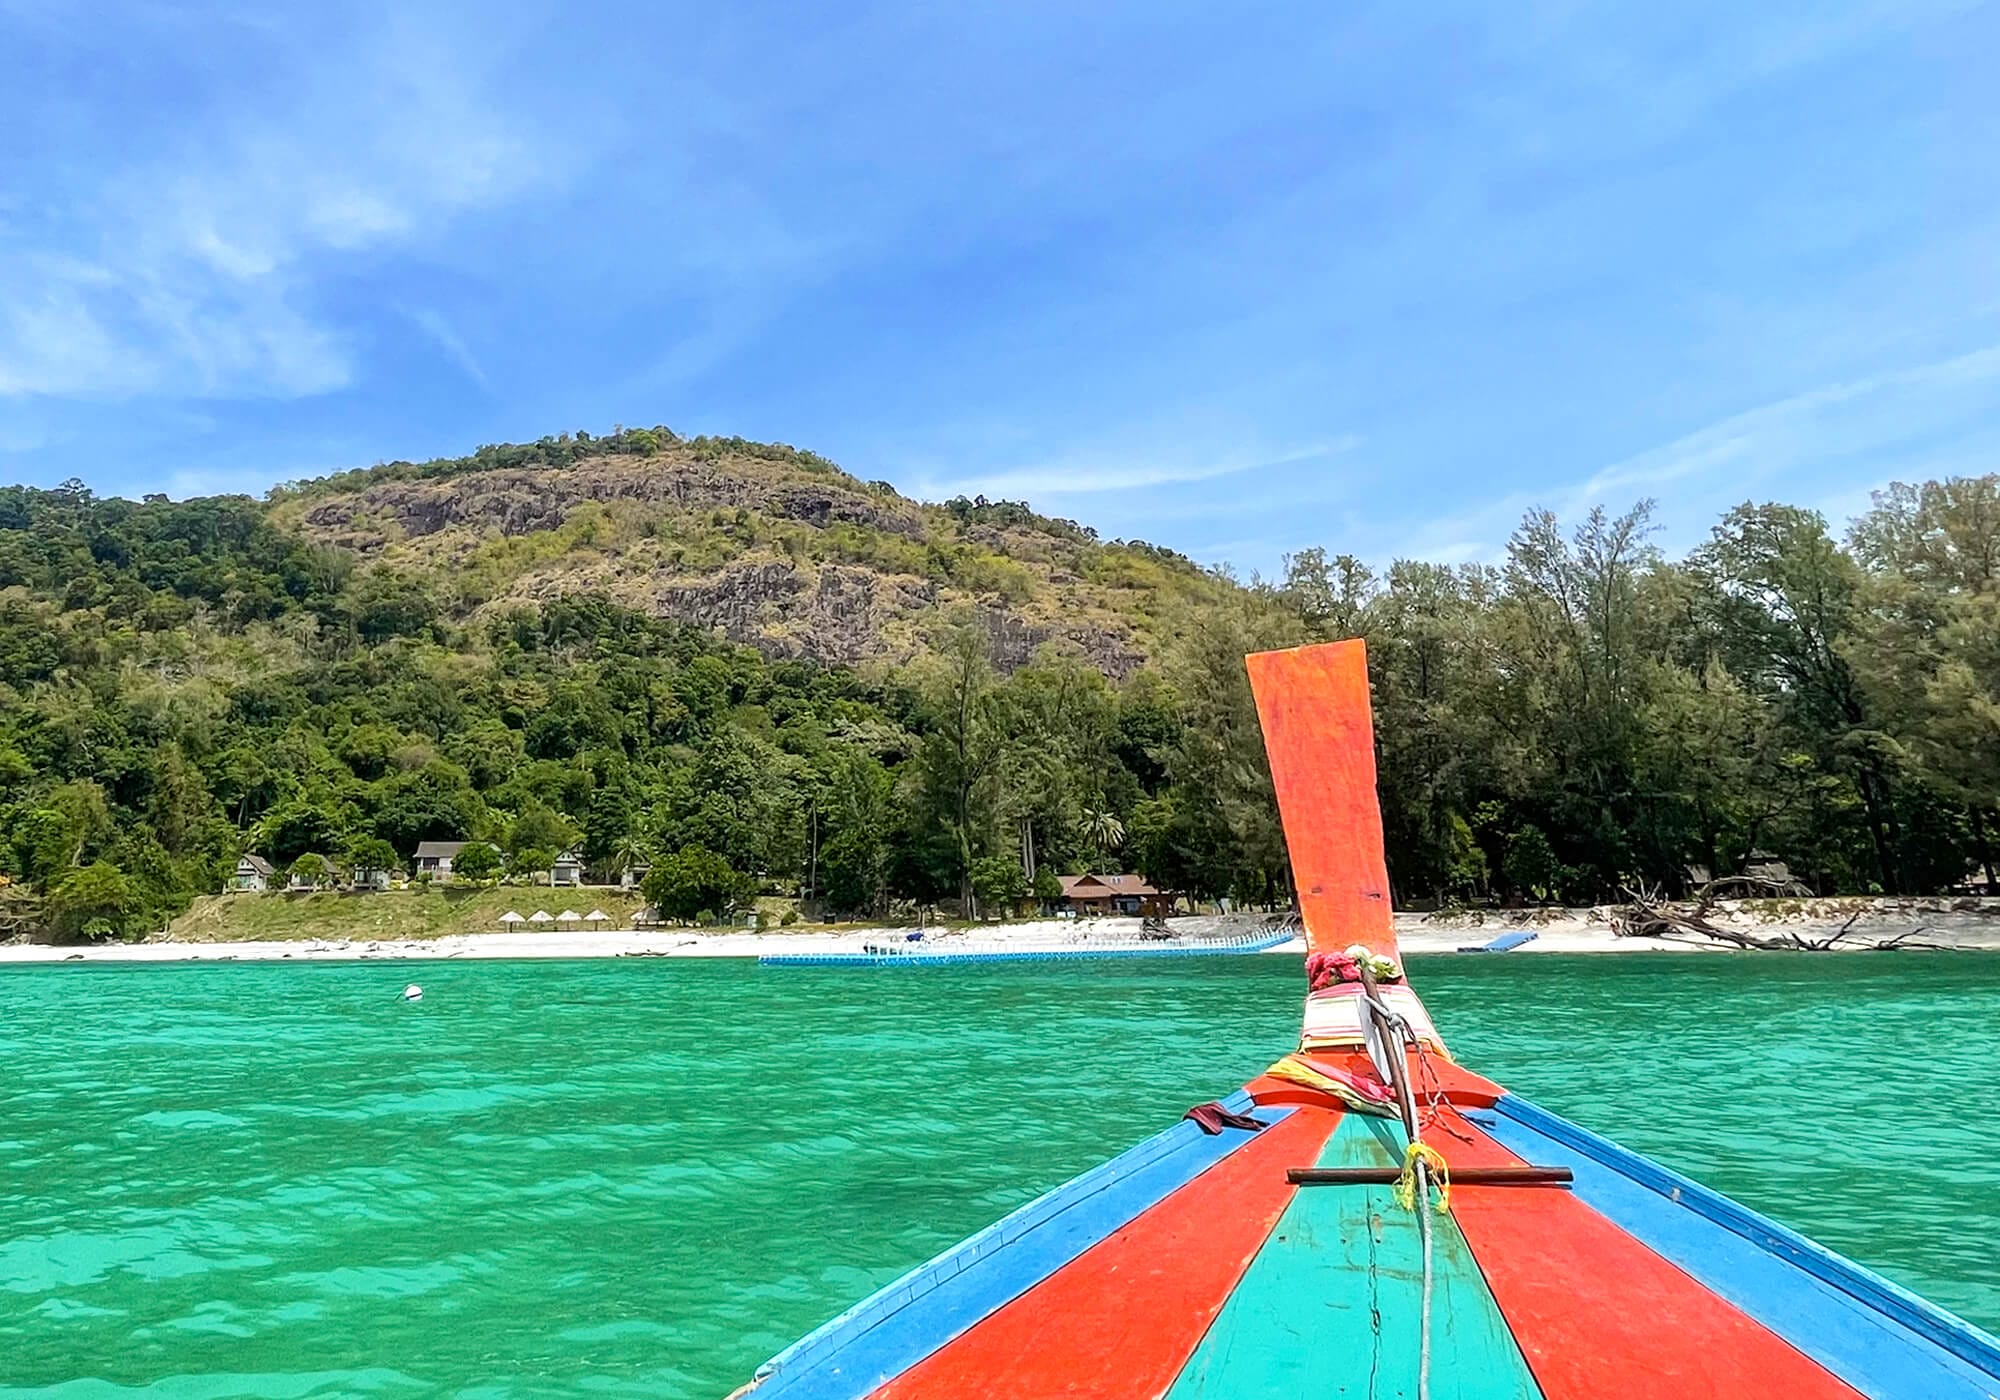 Approaching Koh Adang Island by Longtail boat